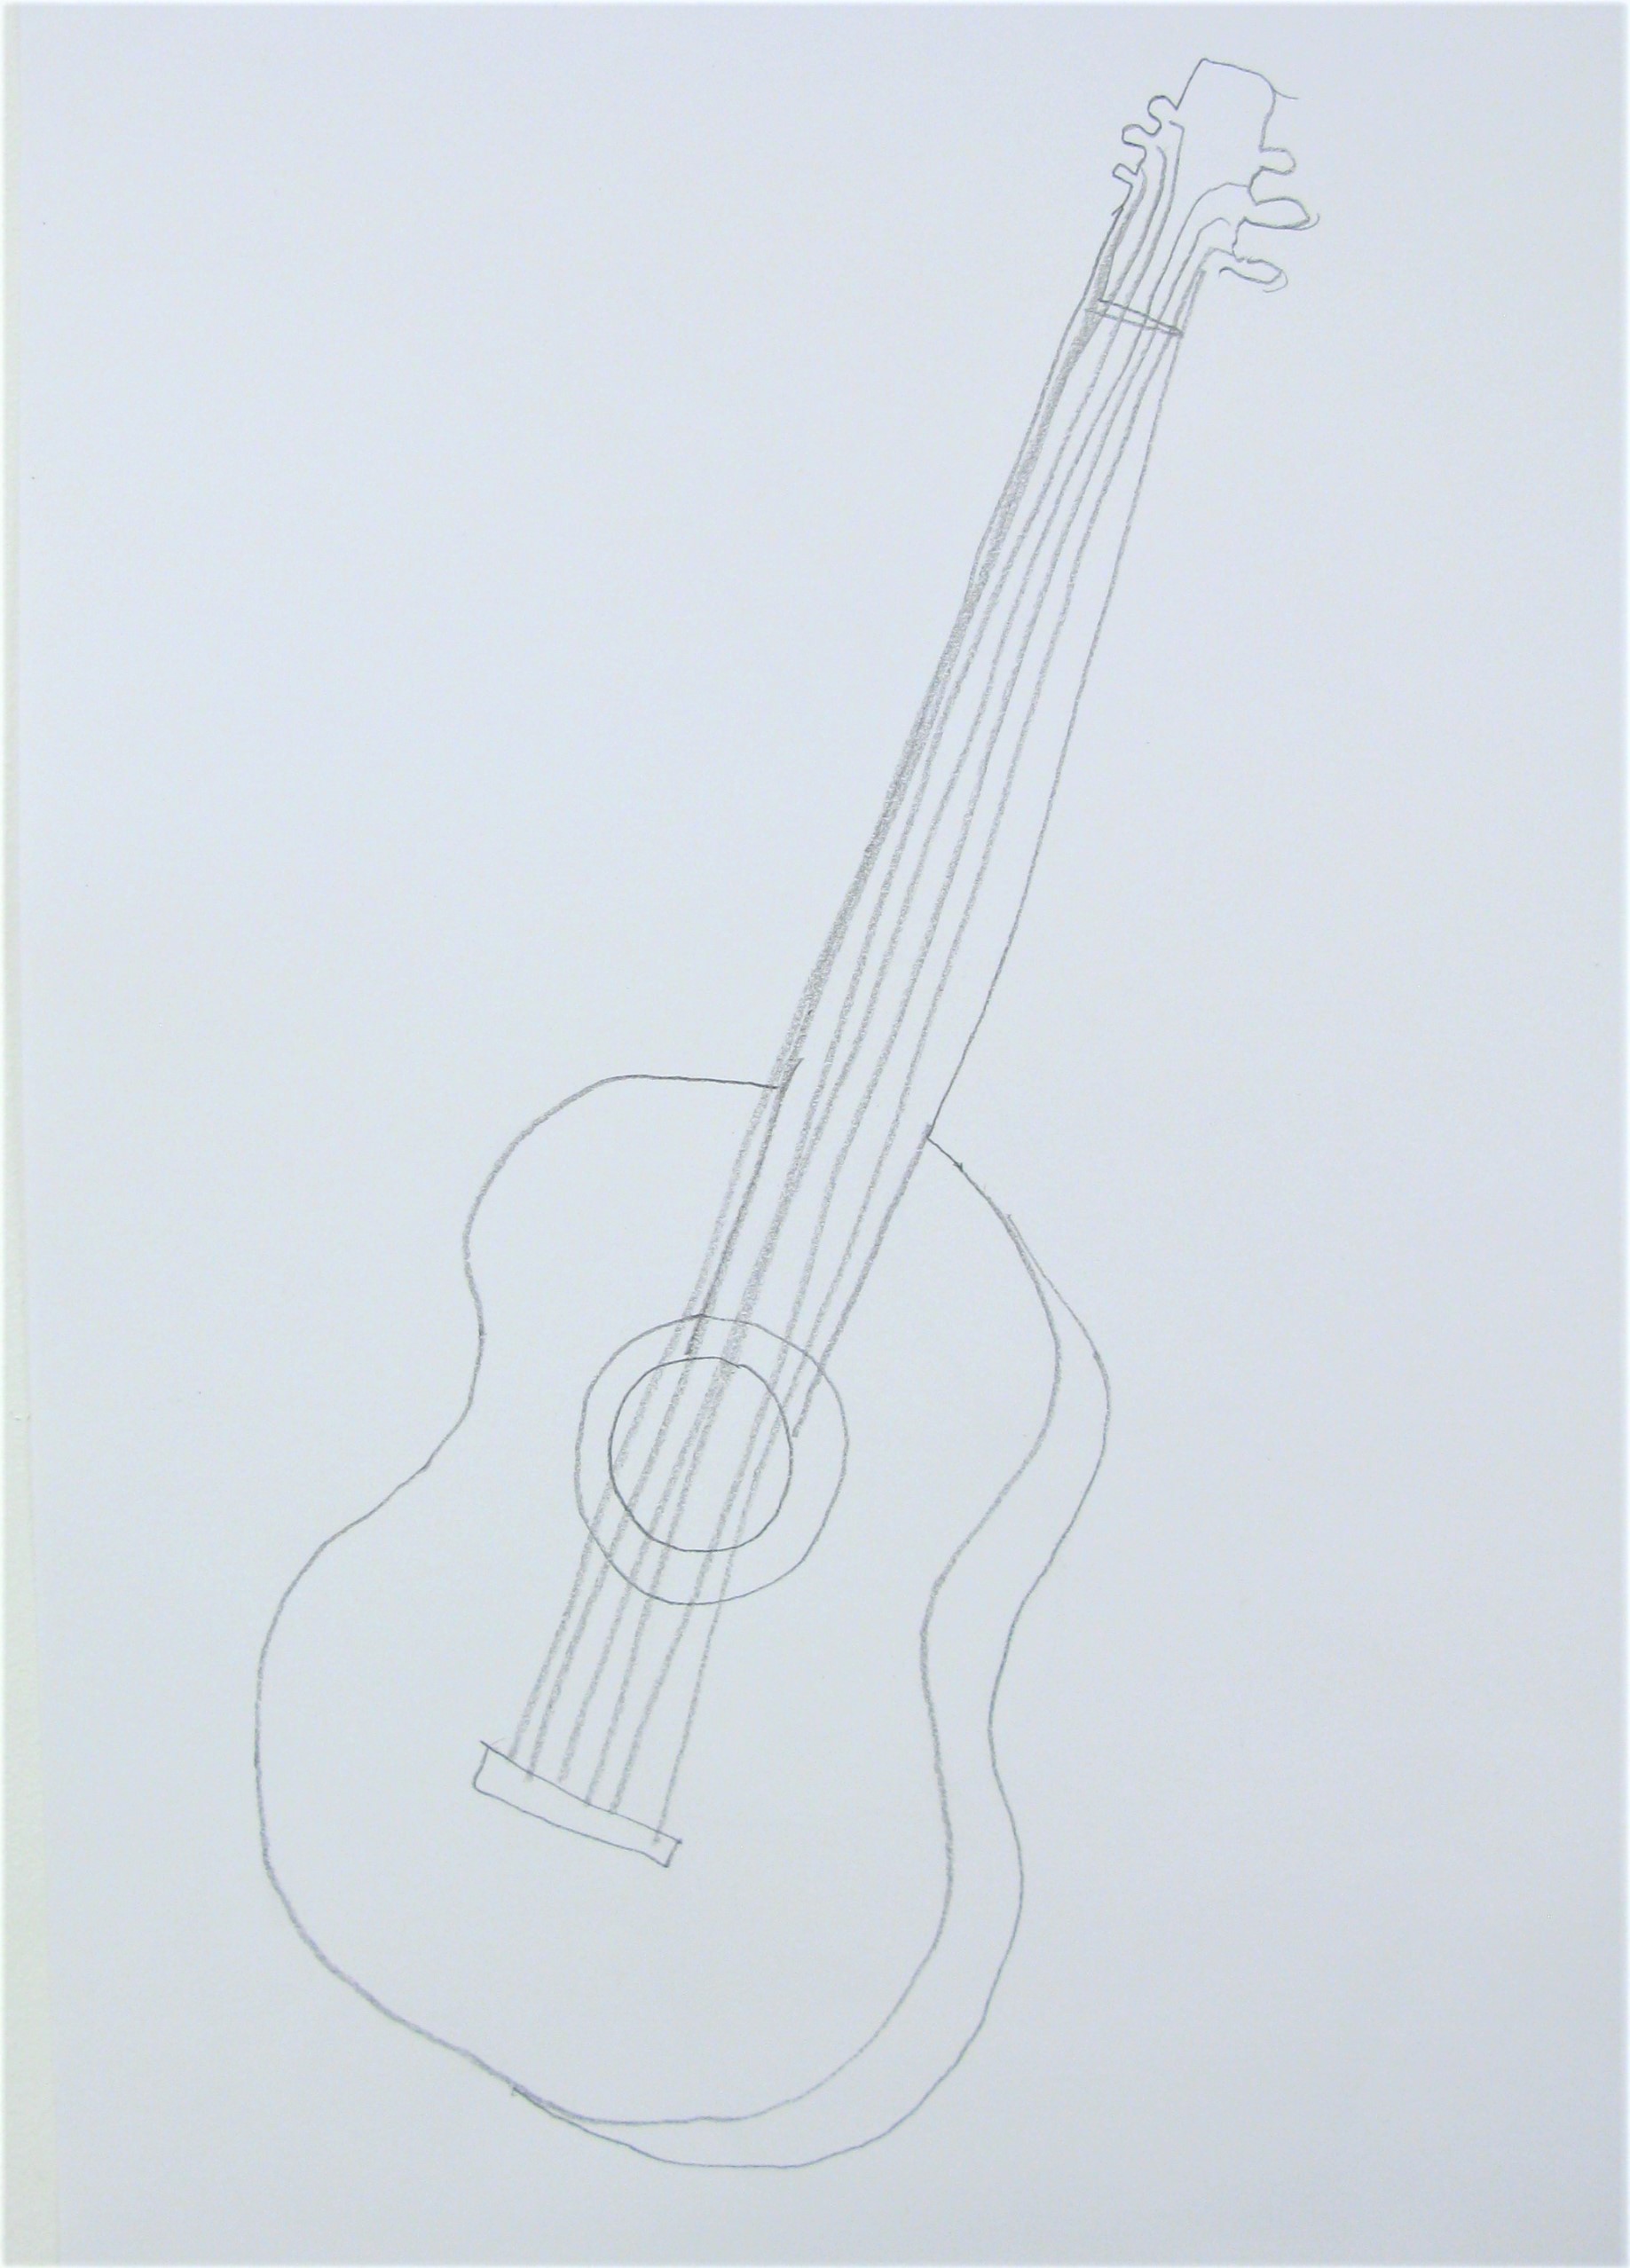 Pencil drawing of a guitar, three-quarter view